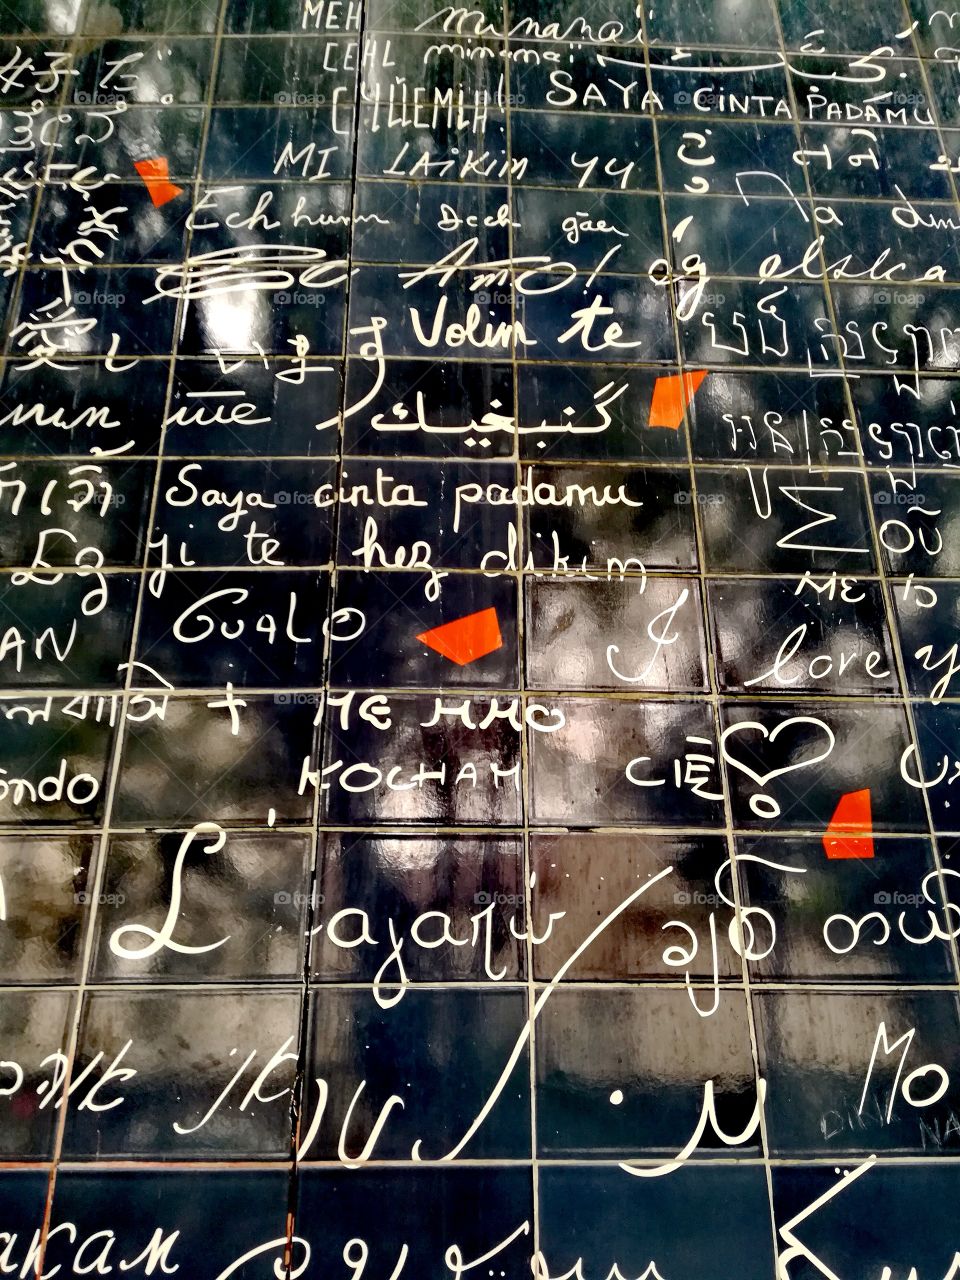 The "i love you wall", Paris